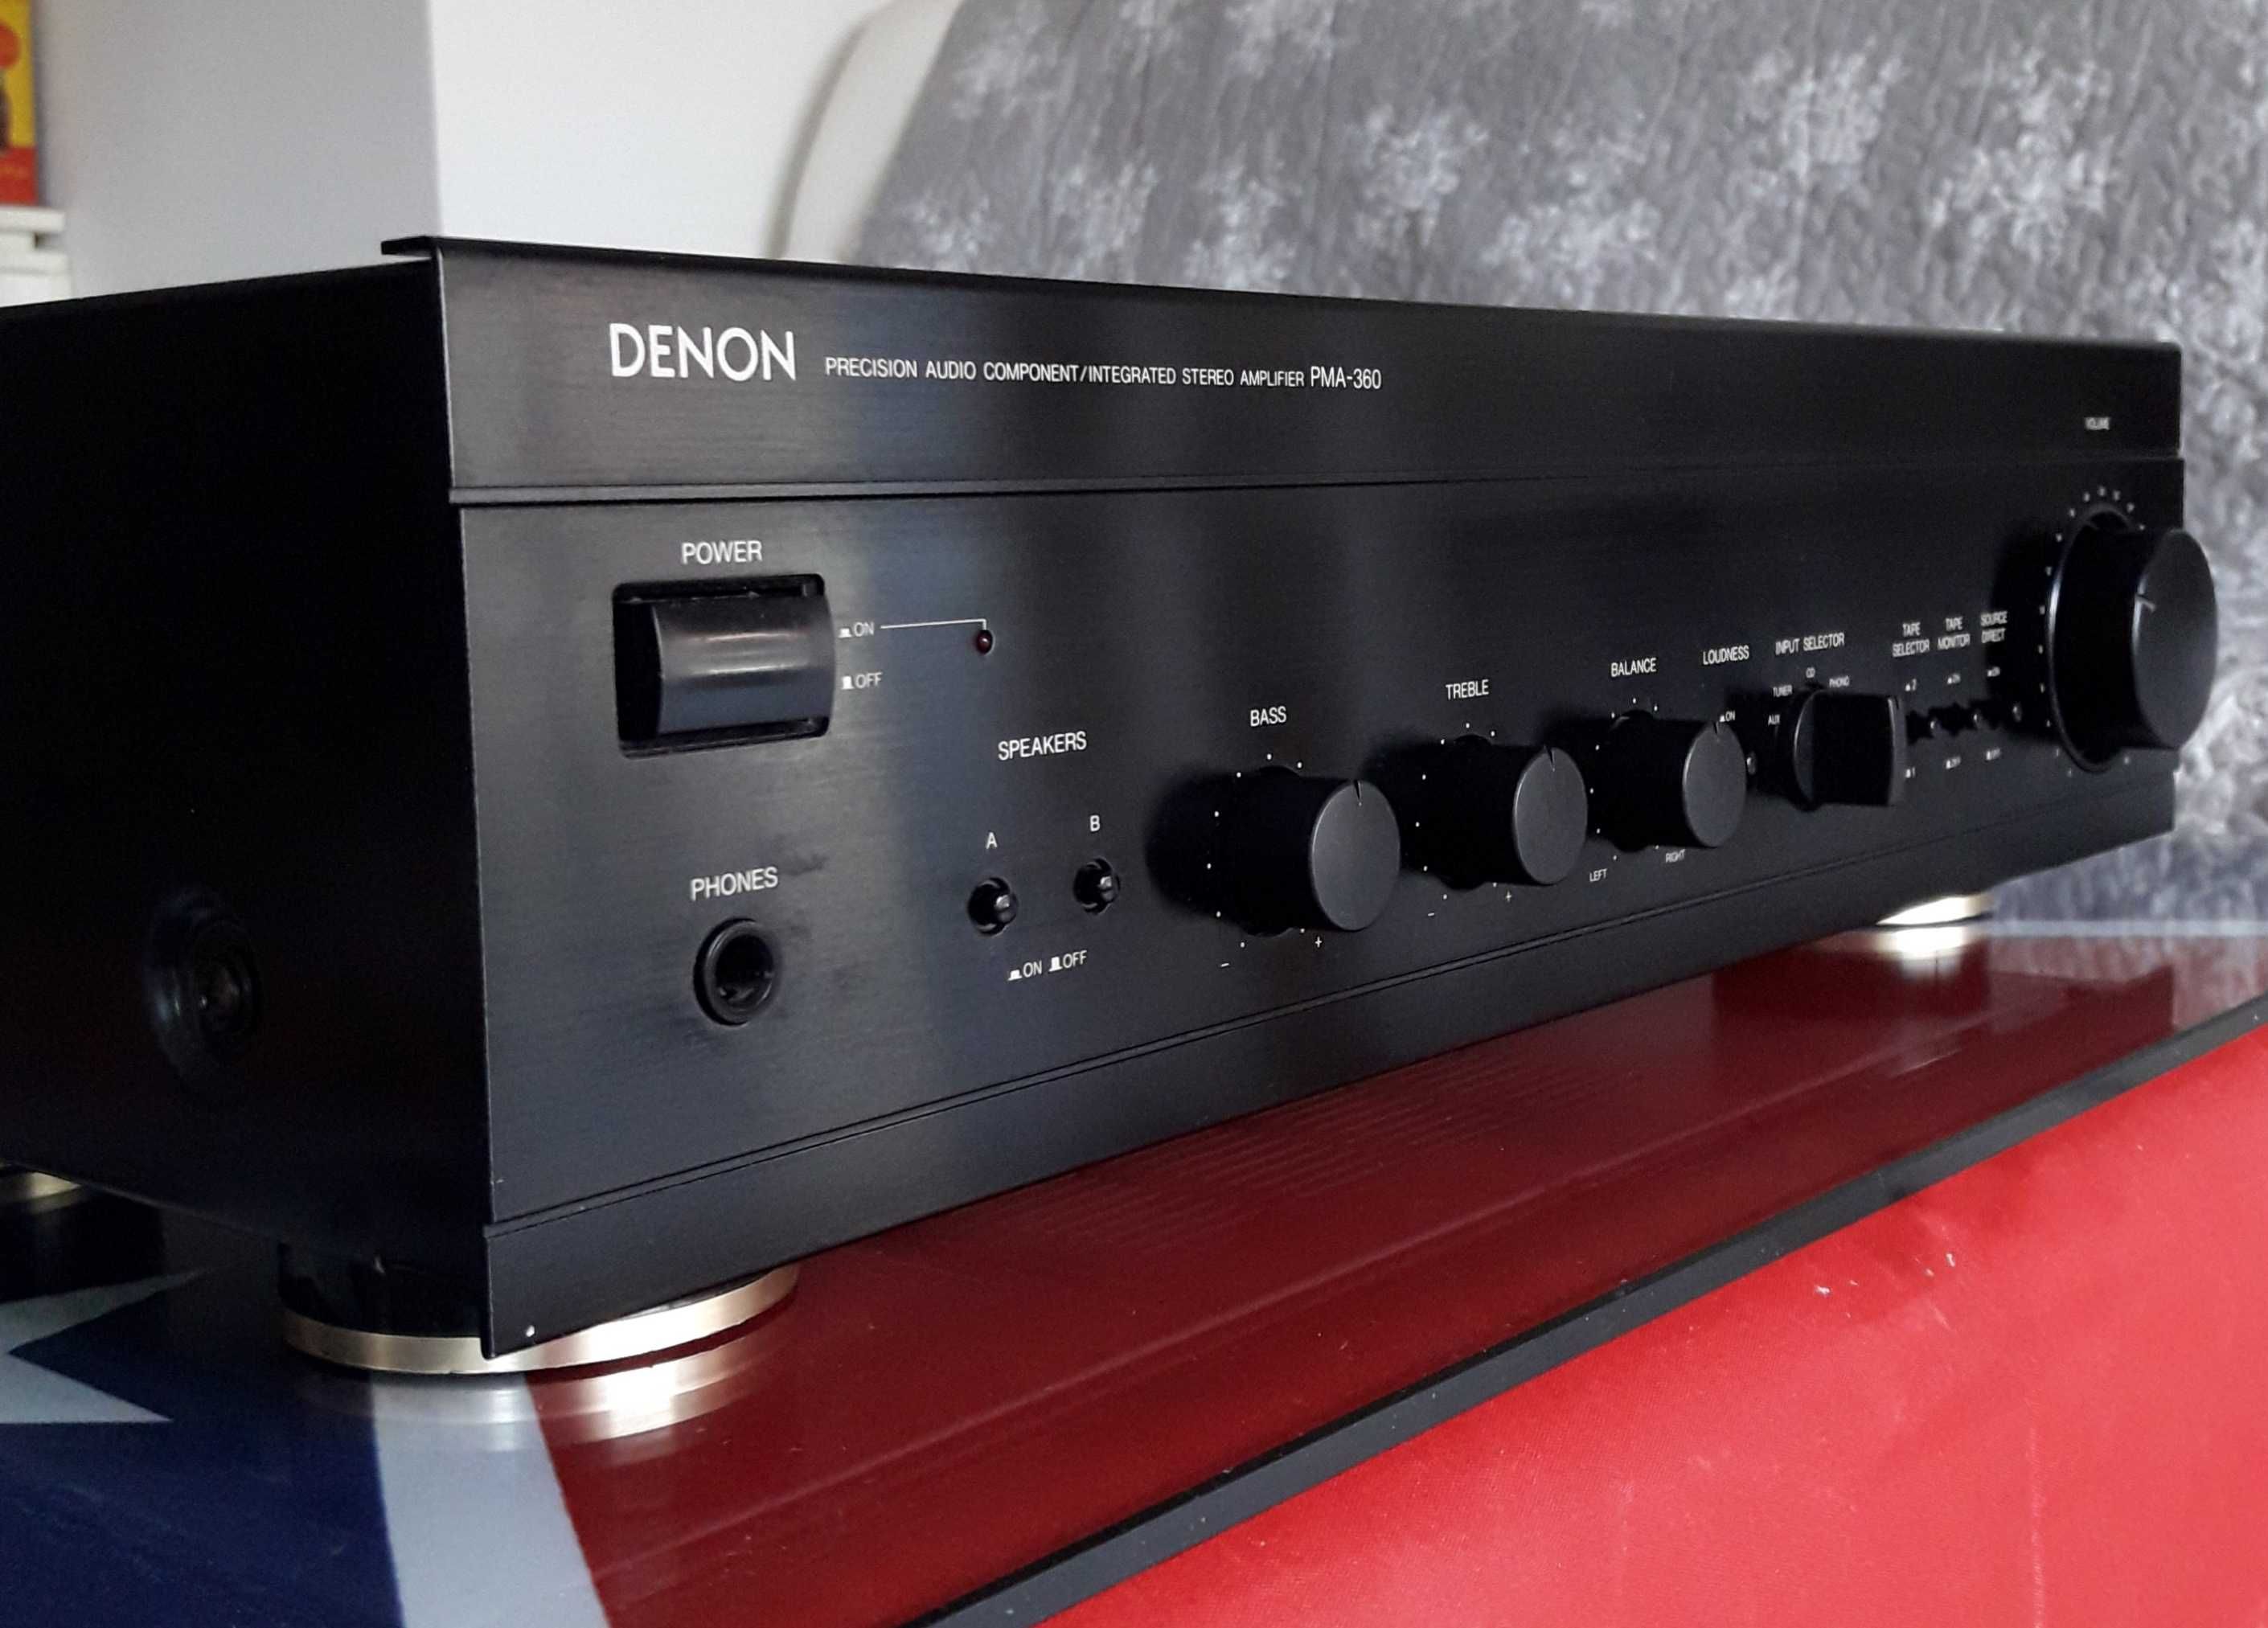 Denon amplifier PMA-360